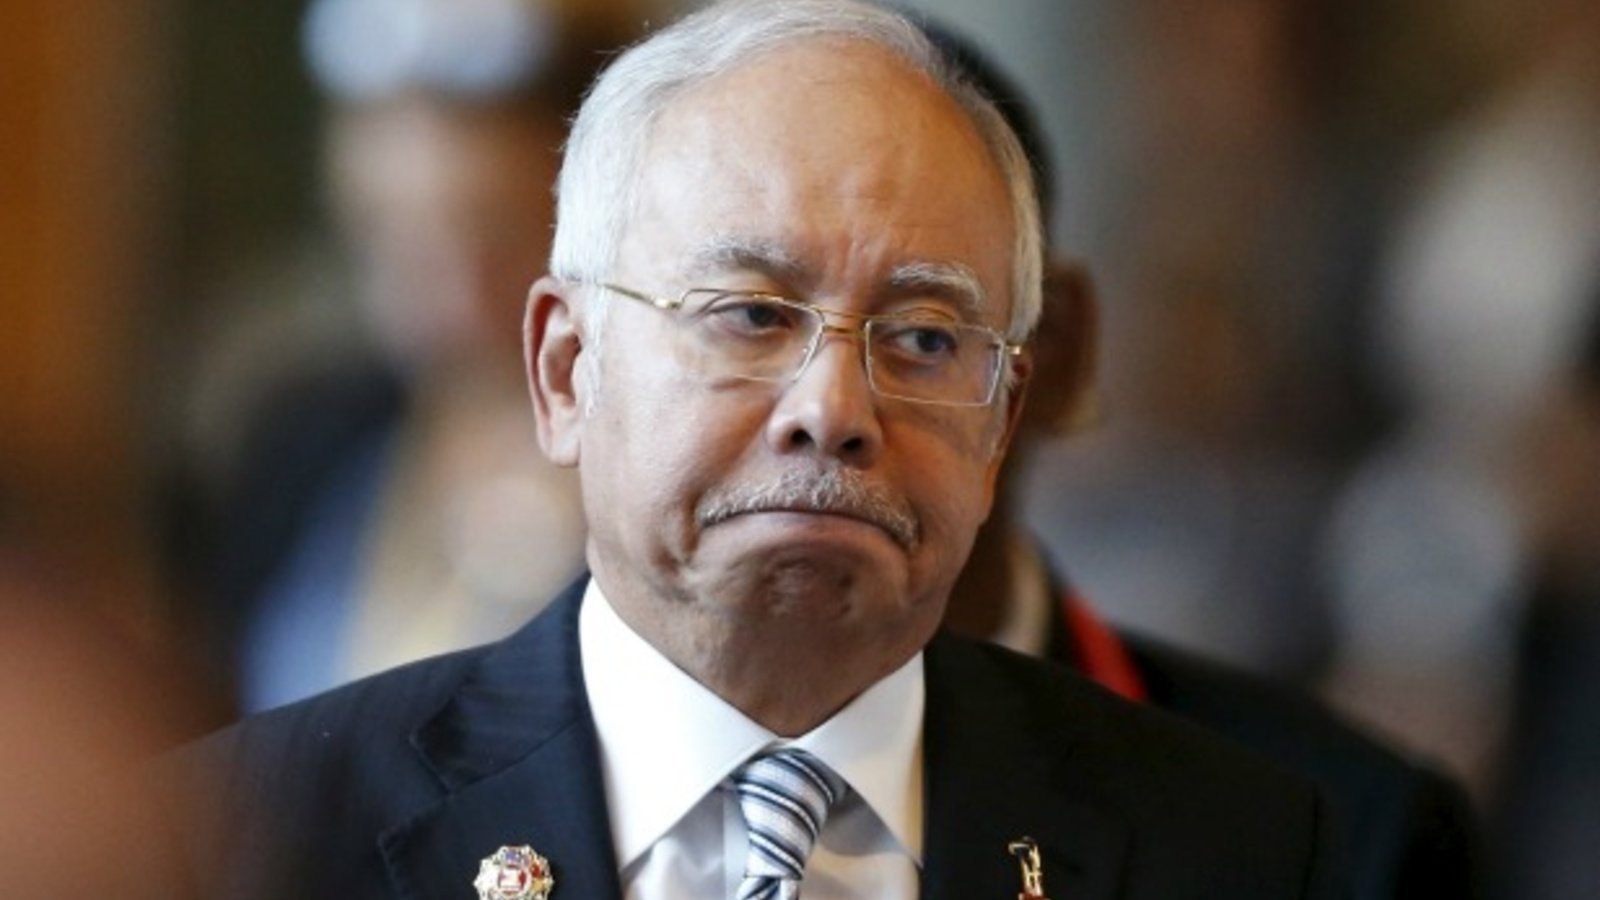  Fostul premier malaysian Najib Razak, condamnat la 12 ani de închisoare în scandalul 1MDB